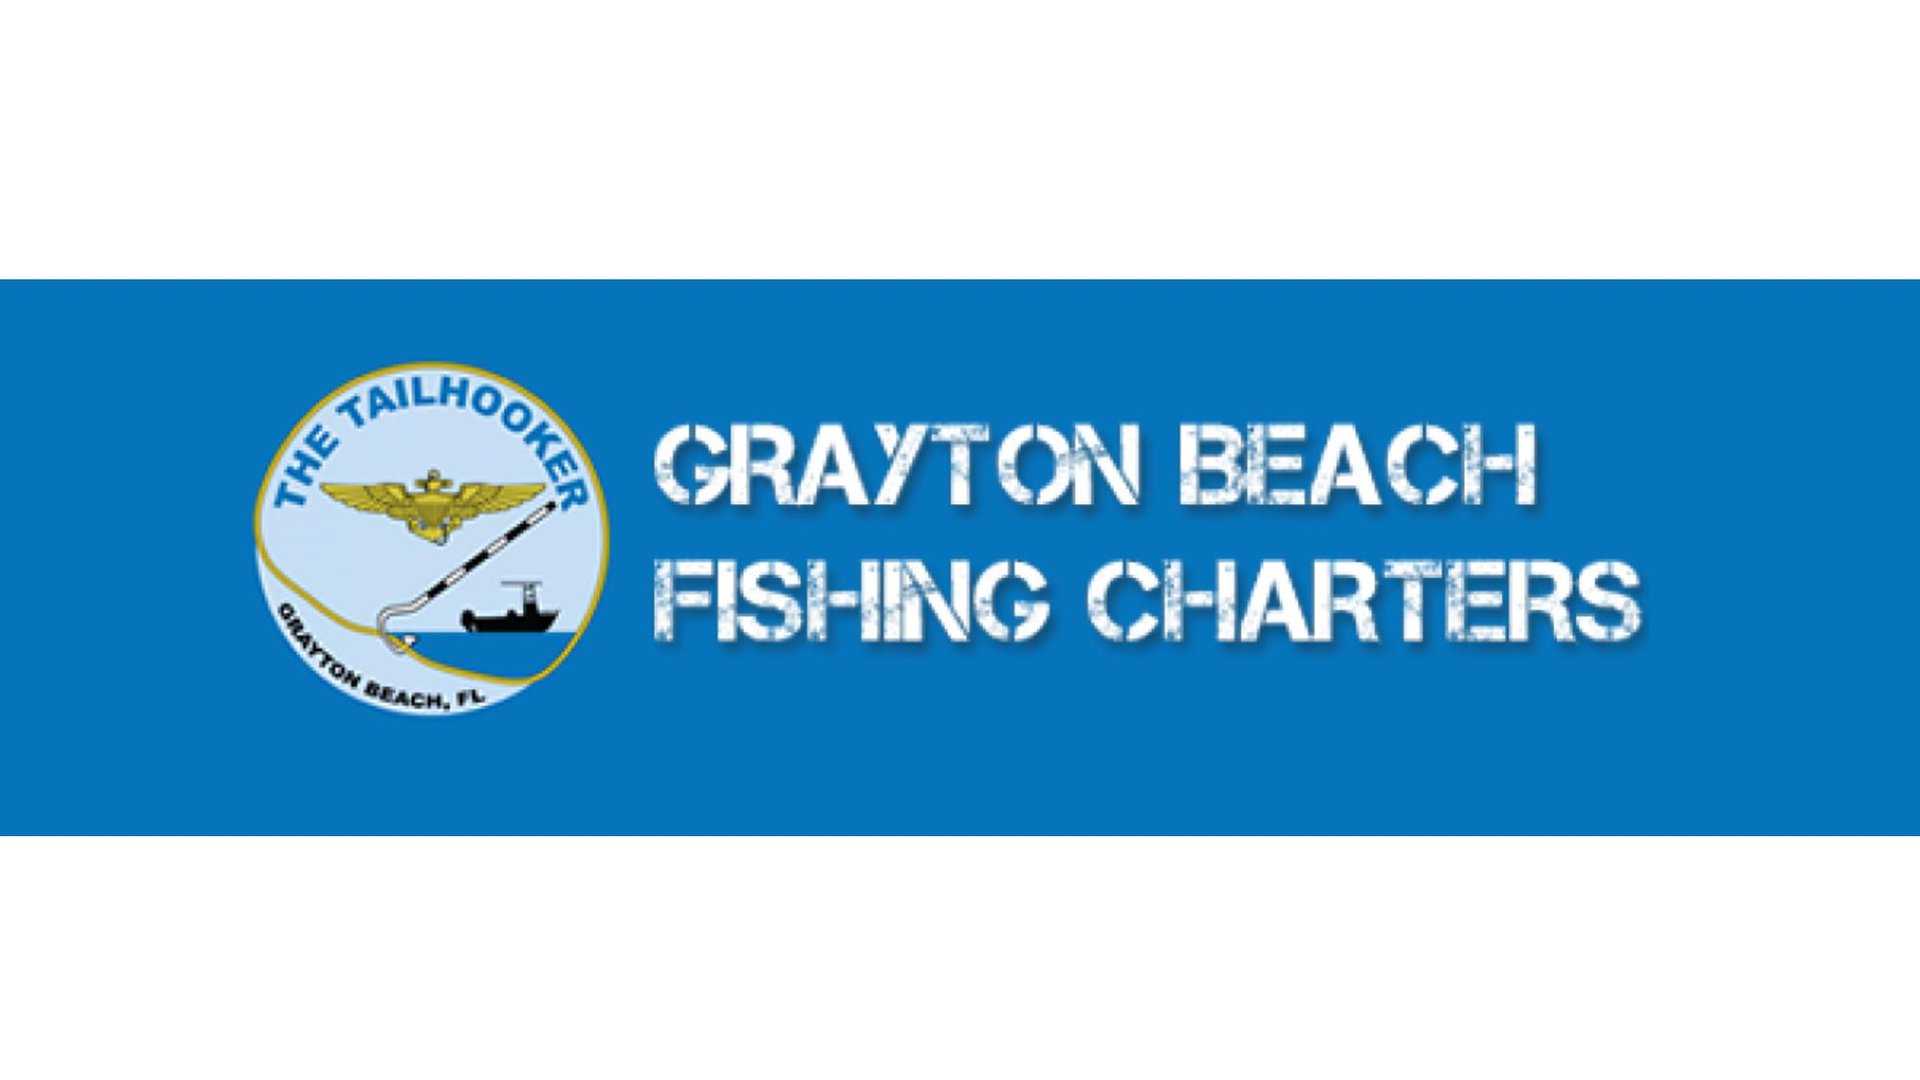 Grayton Beach Fishing Charters